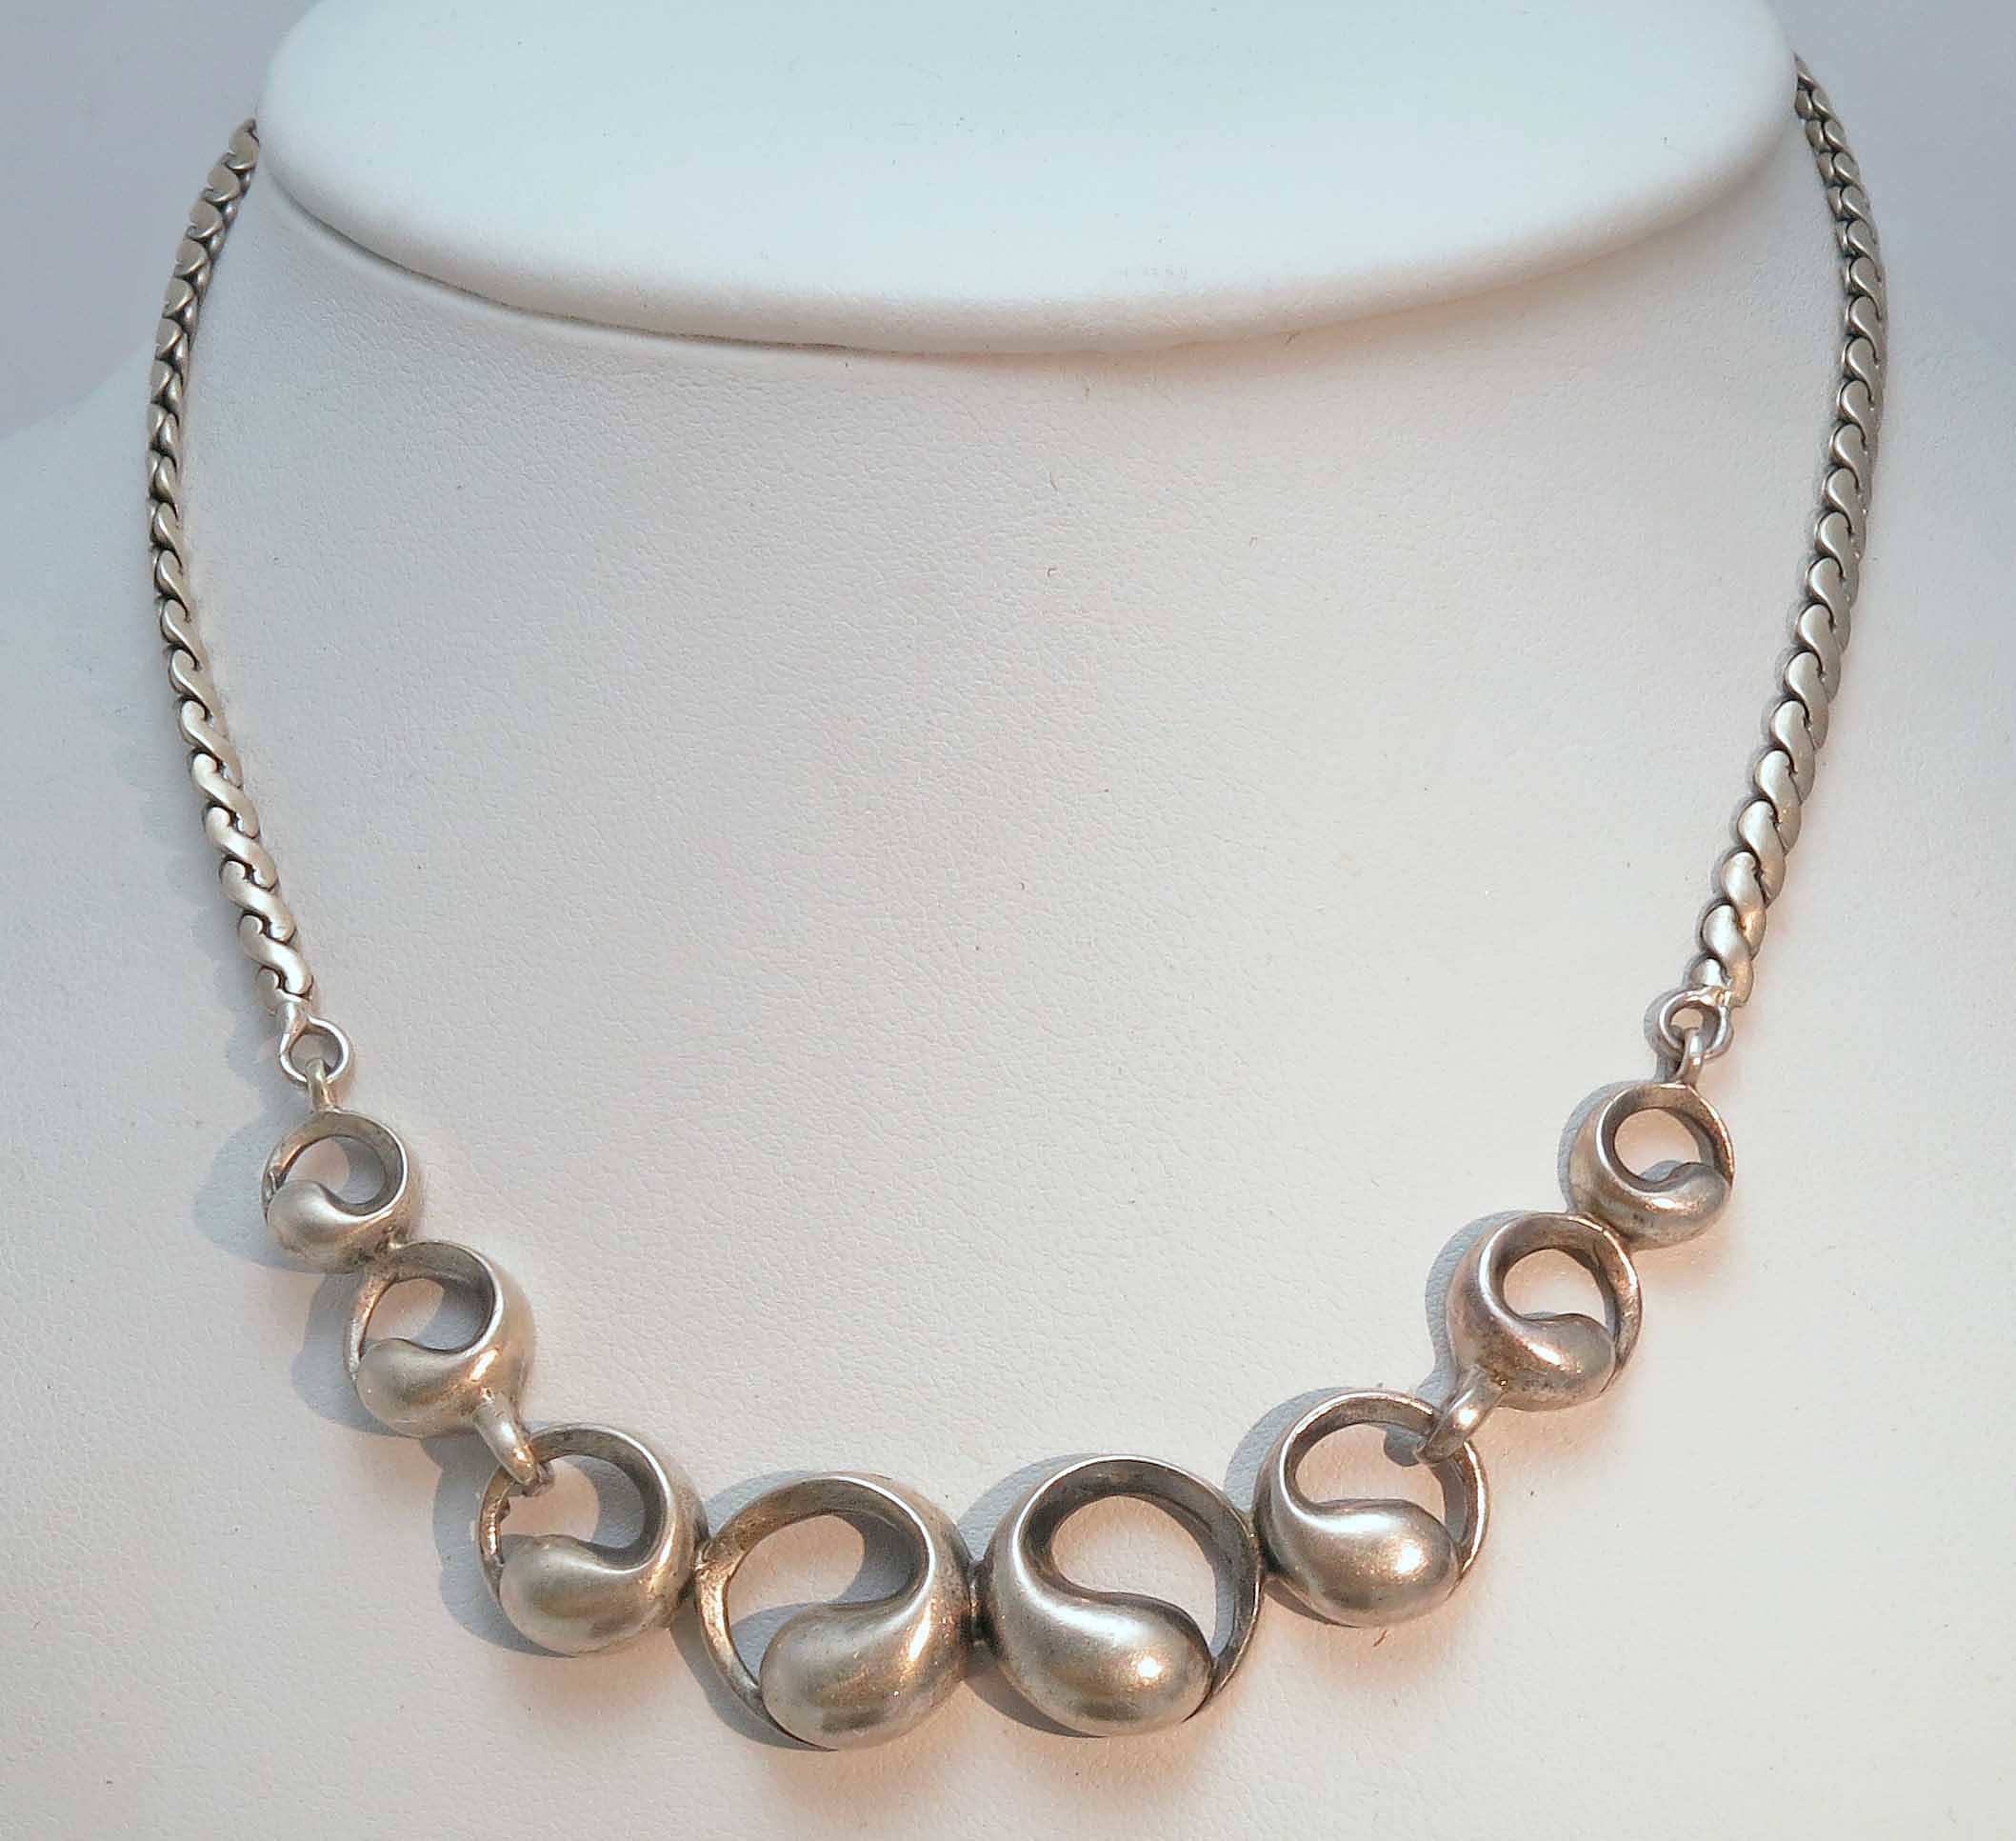 Italian Sterling Silver Necklace - Lot 1100859 | ALLBIDS